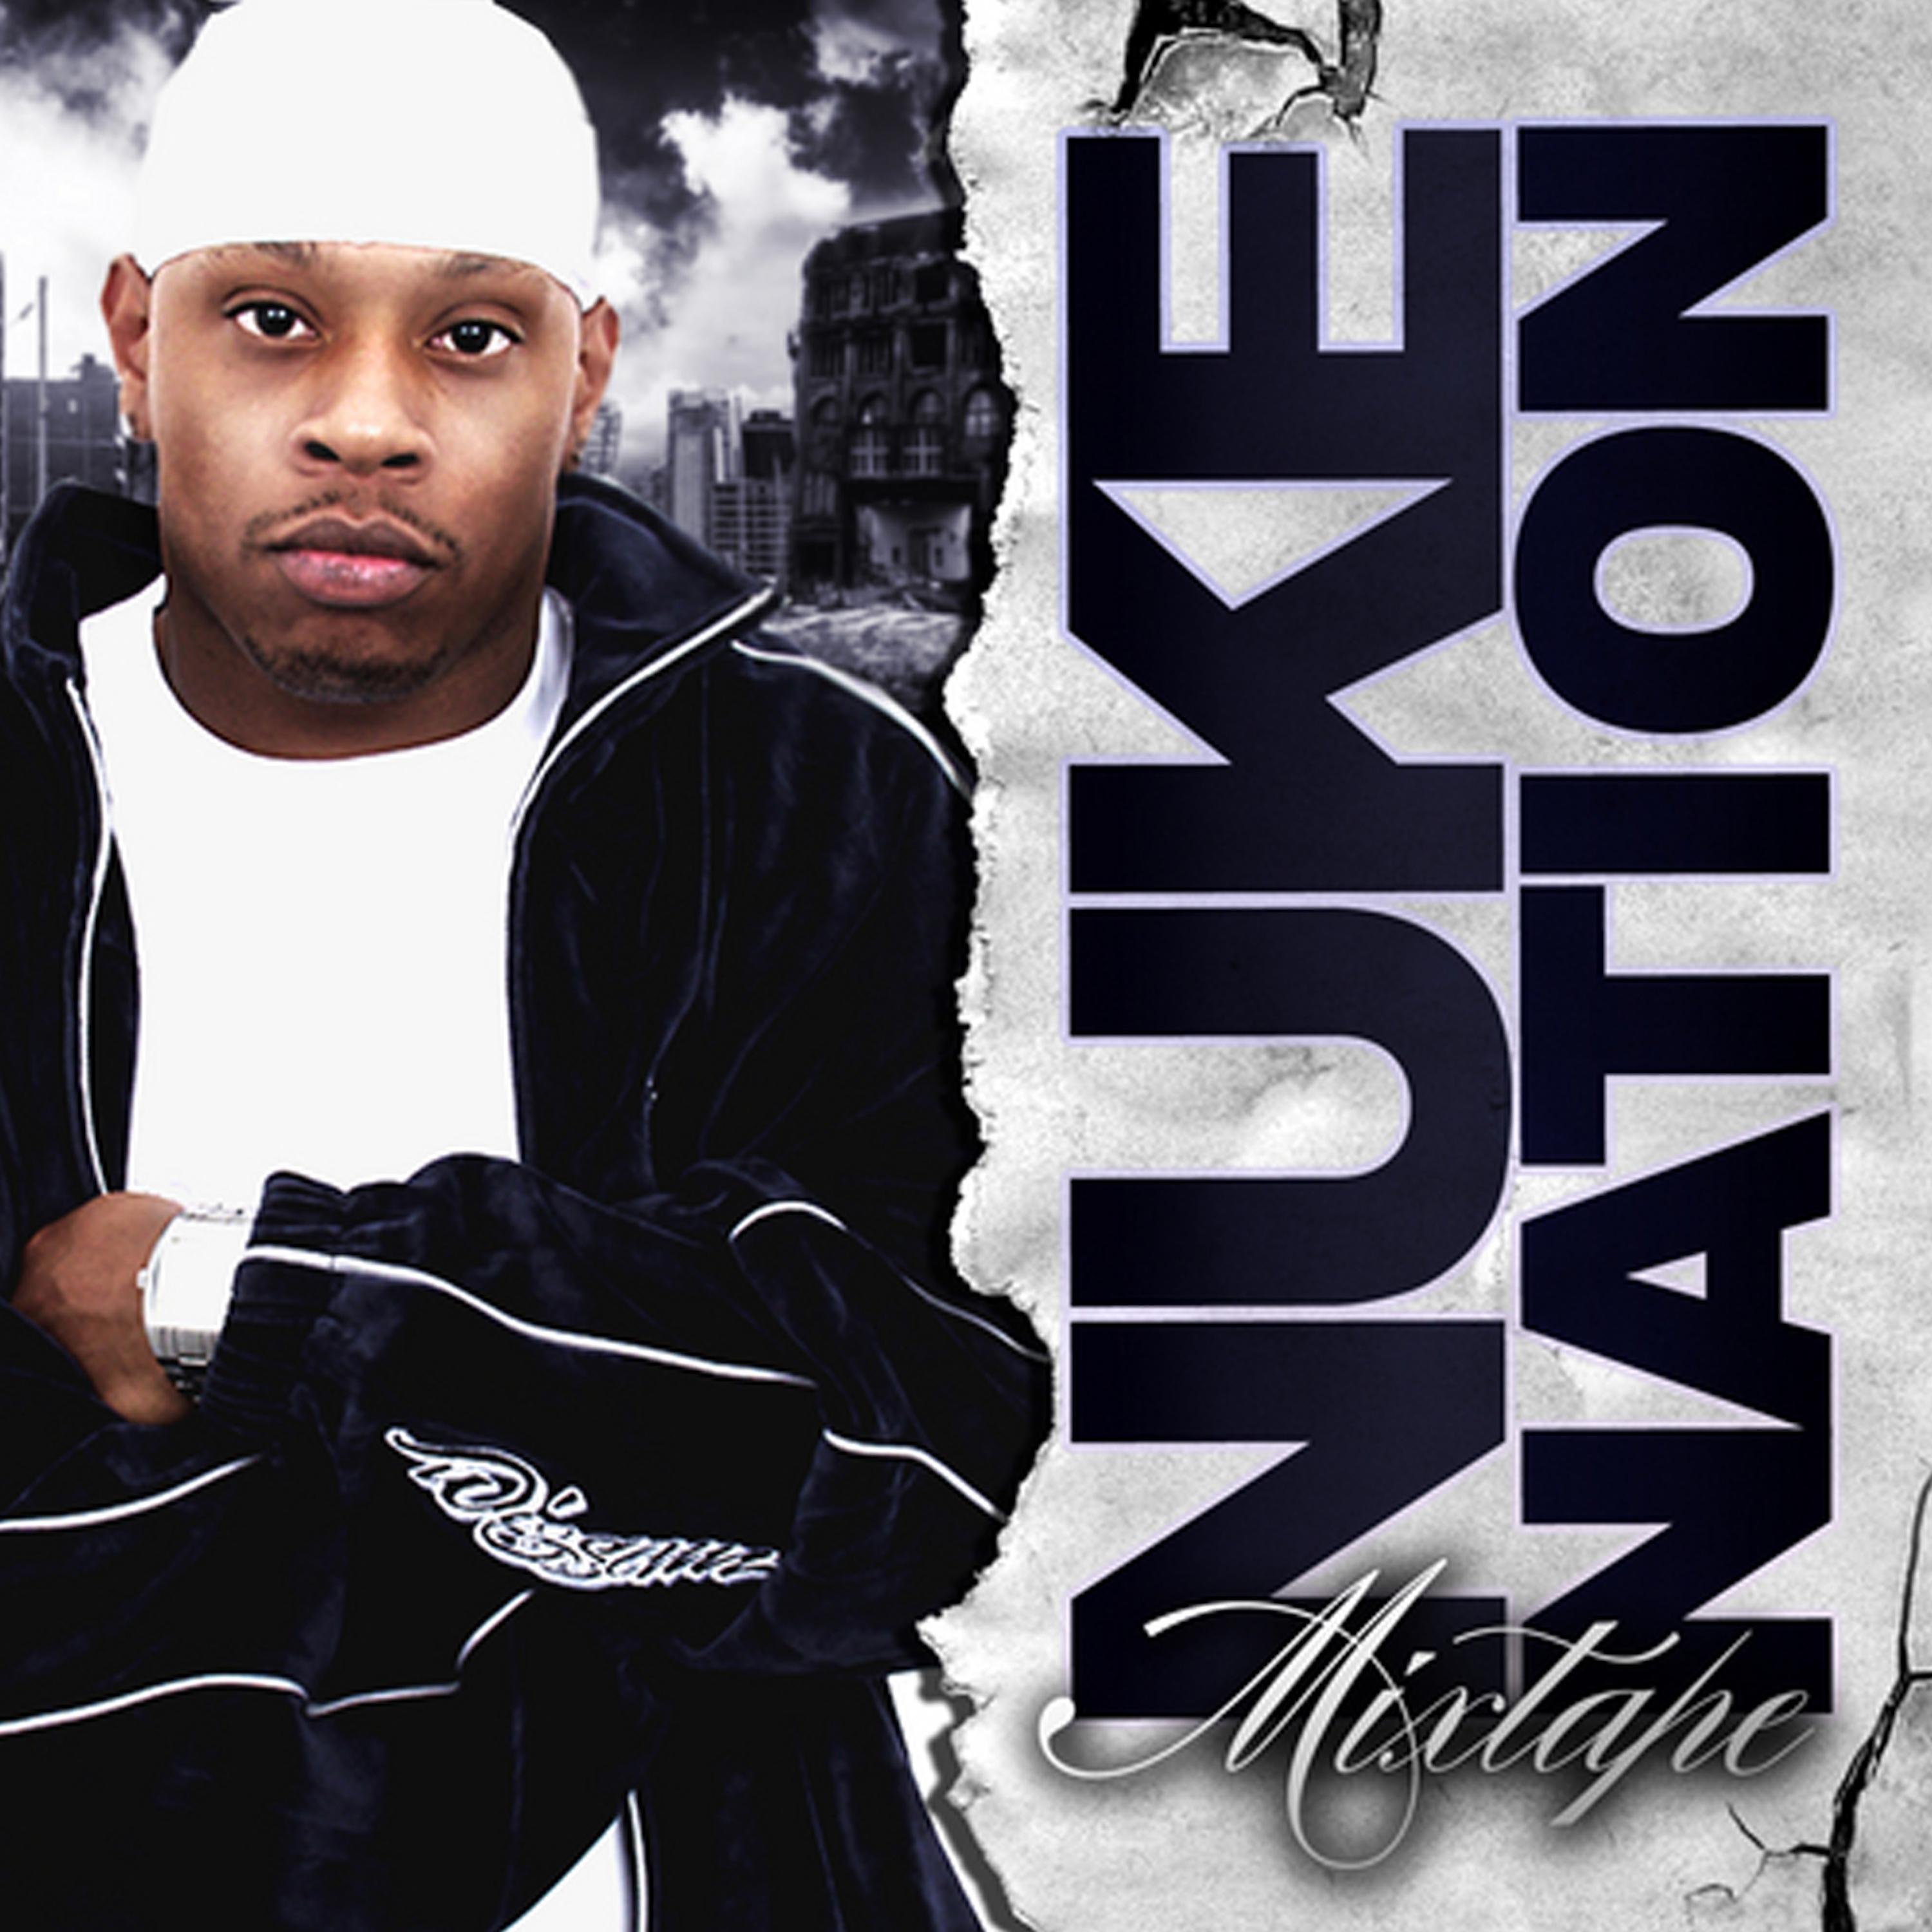 Nuke Nation